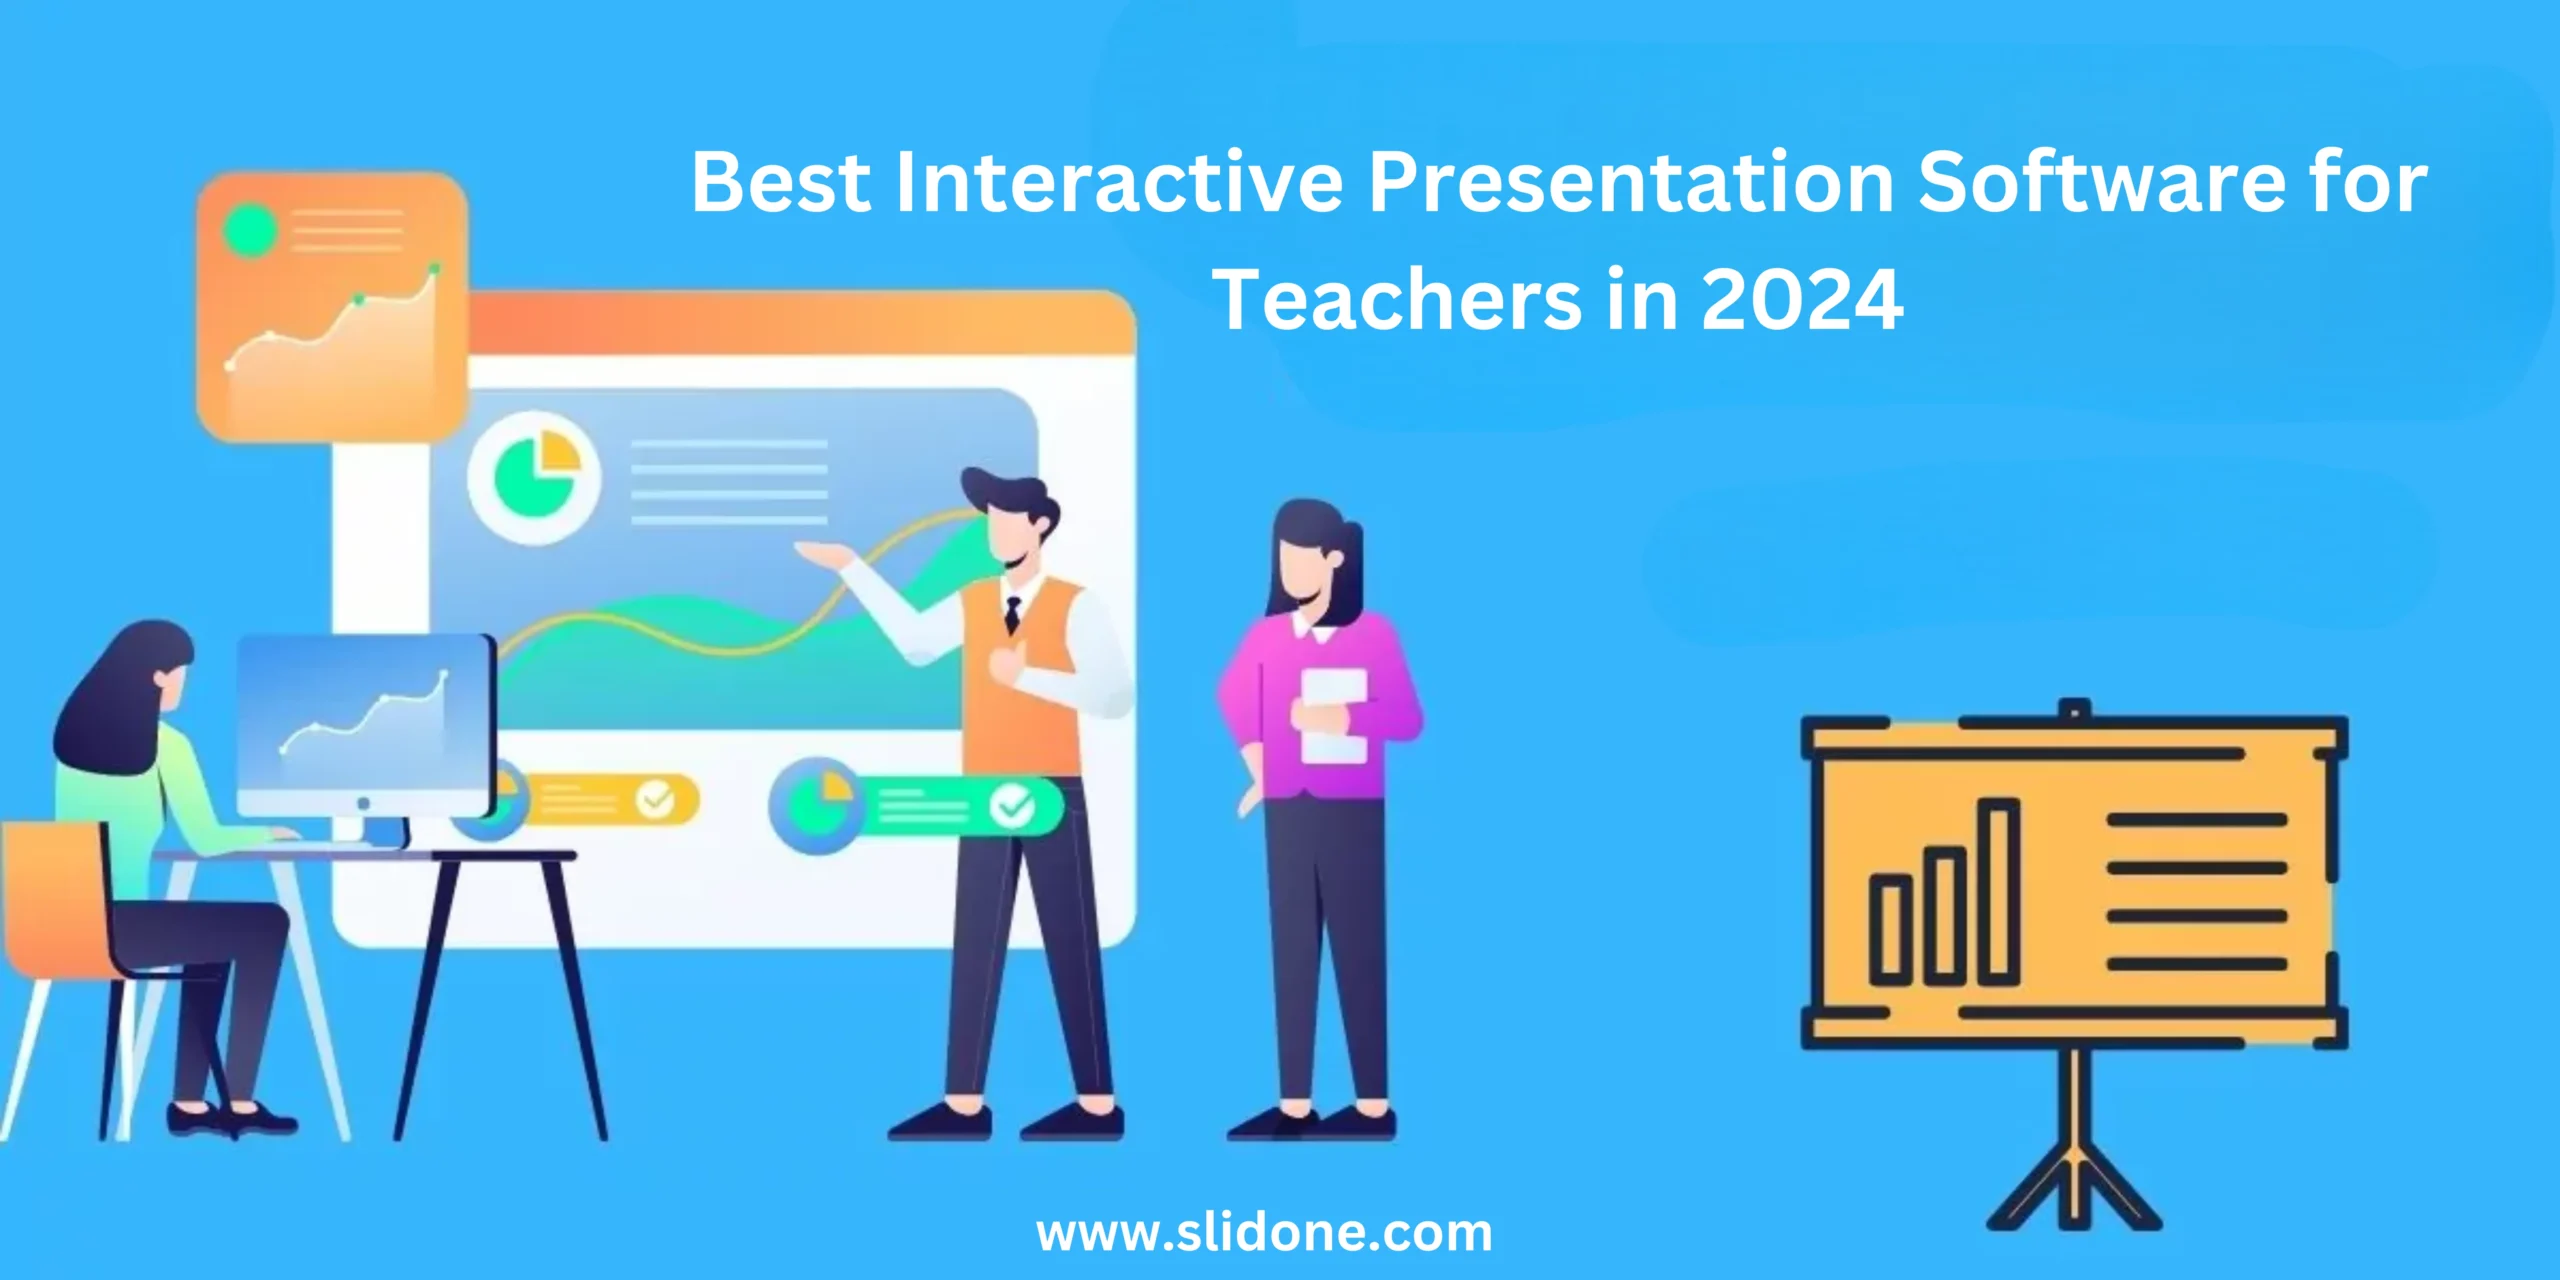 Best Interactive Presentation Software for Teachers in 2024